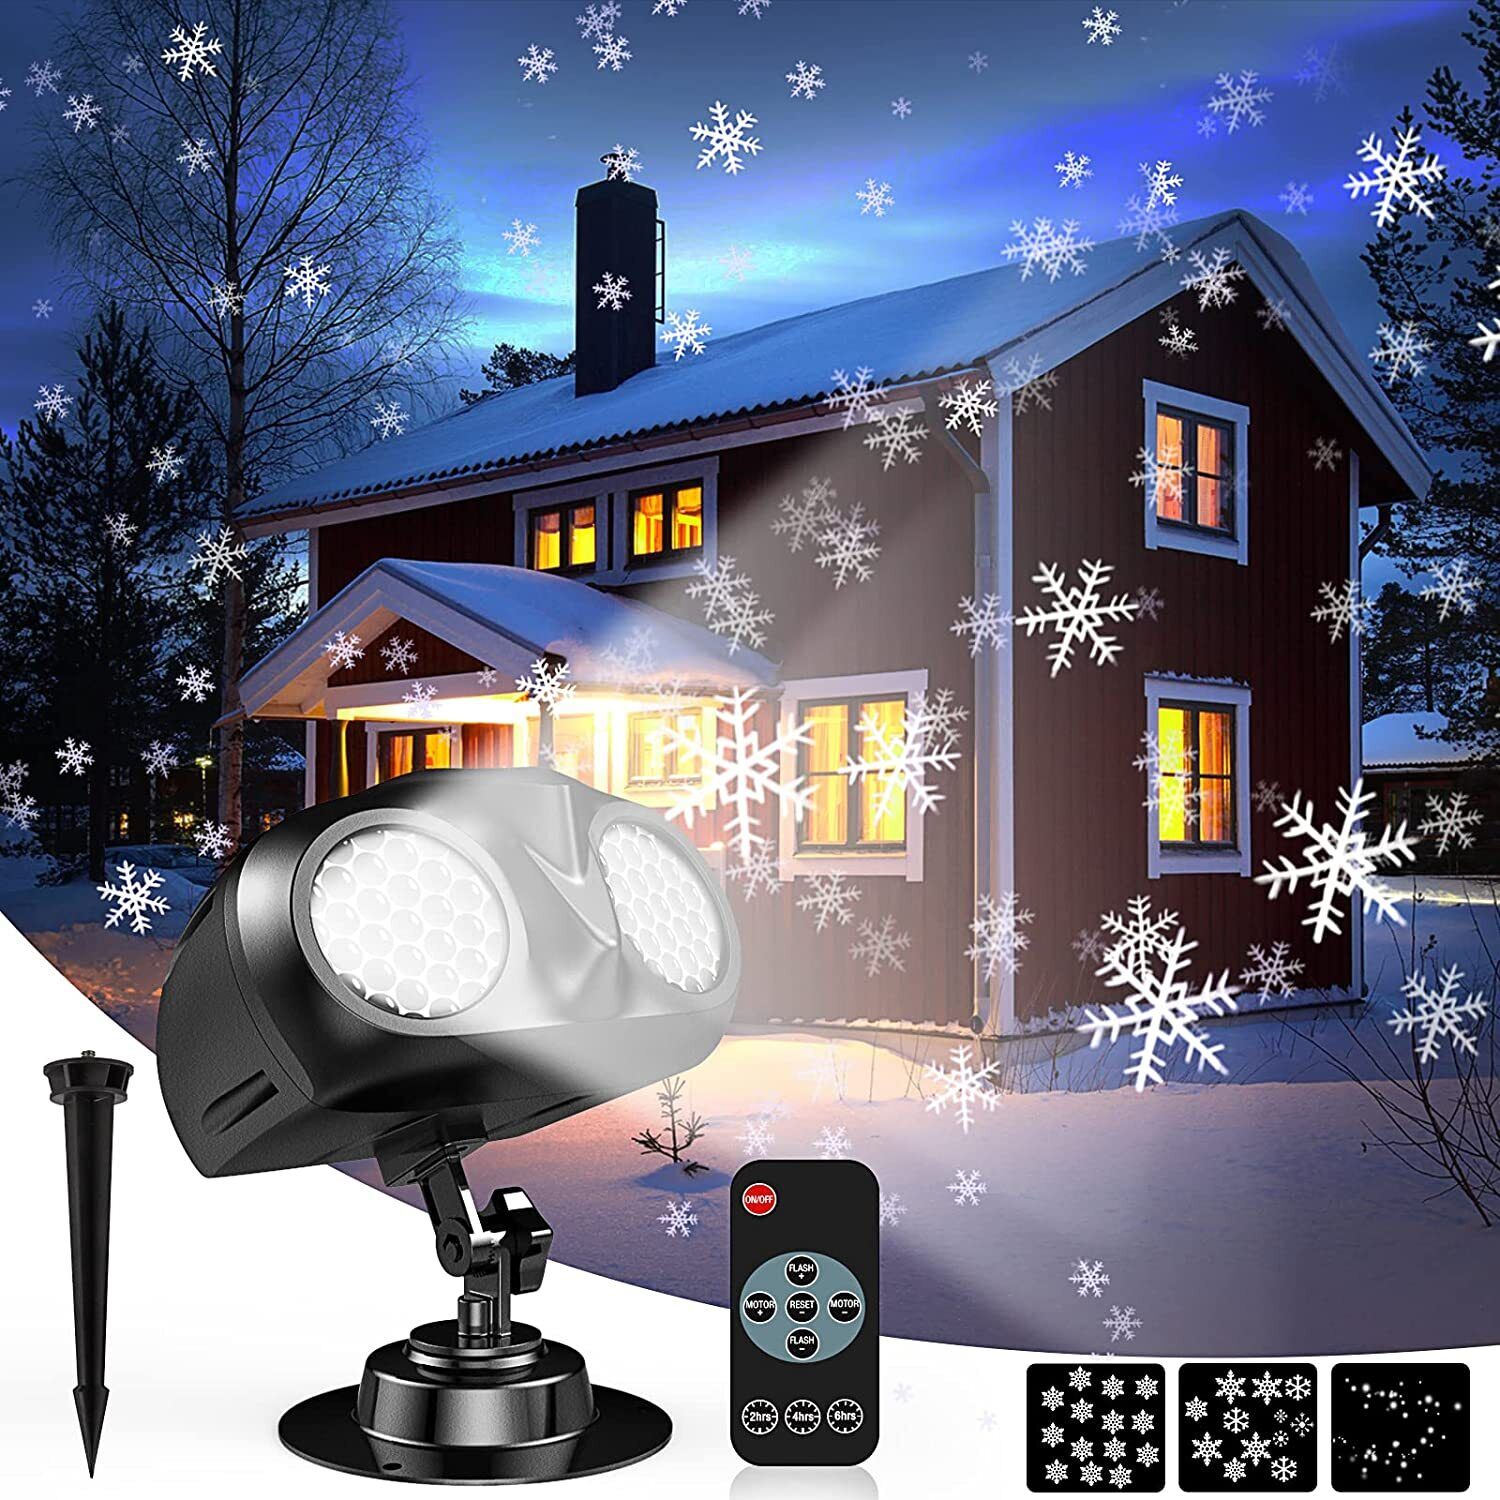 Binocular LED Snowflake Christmas Projector Light Moving Landscape Decor Lamp